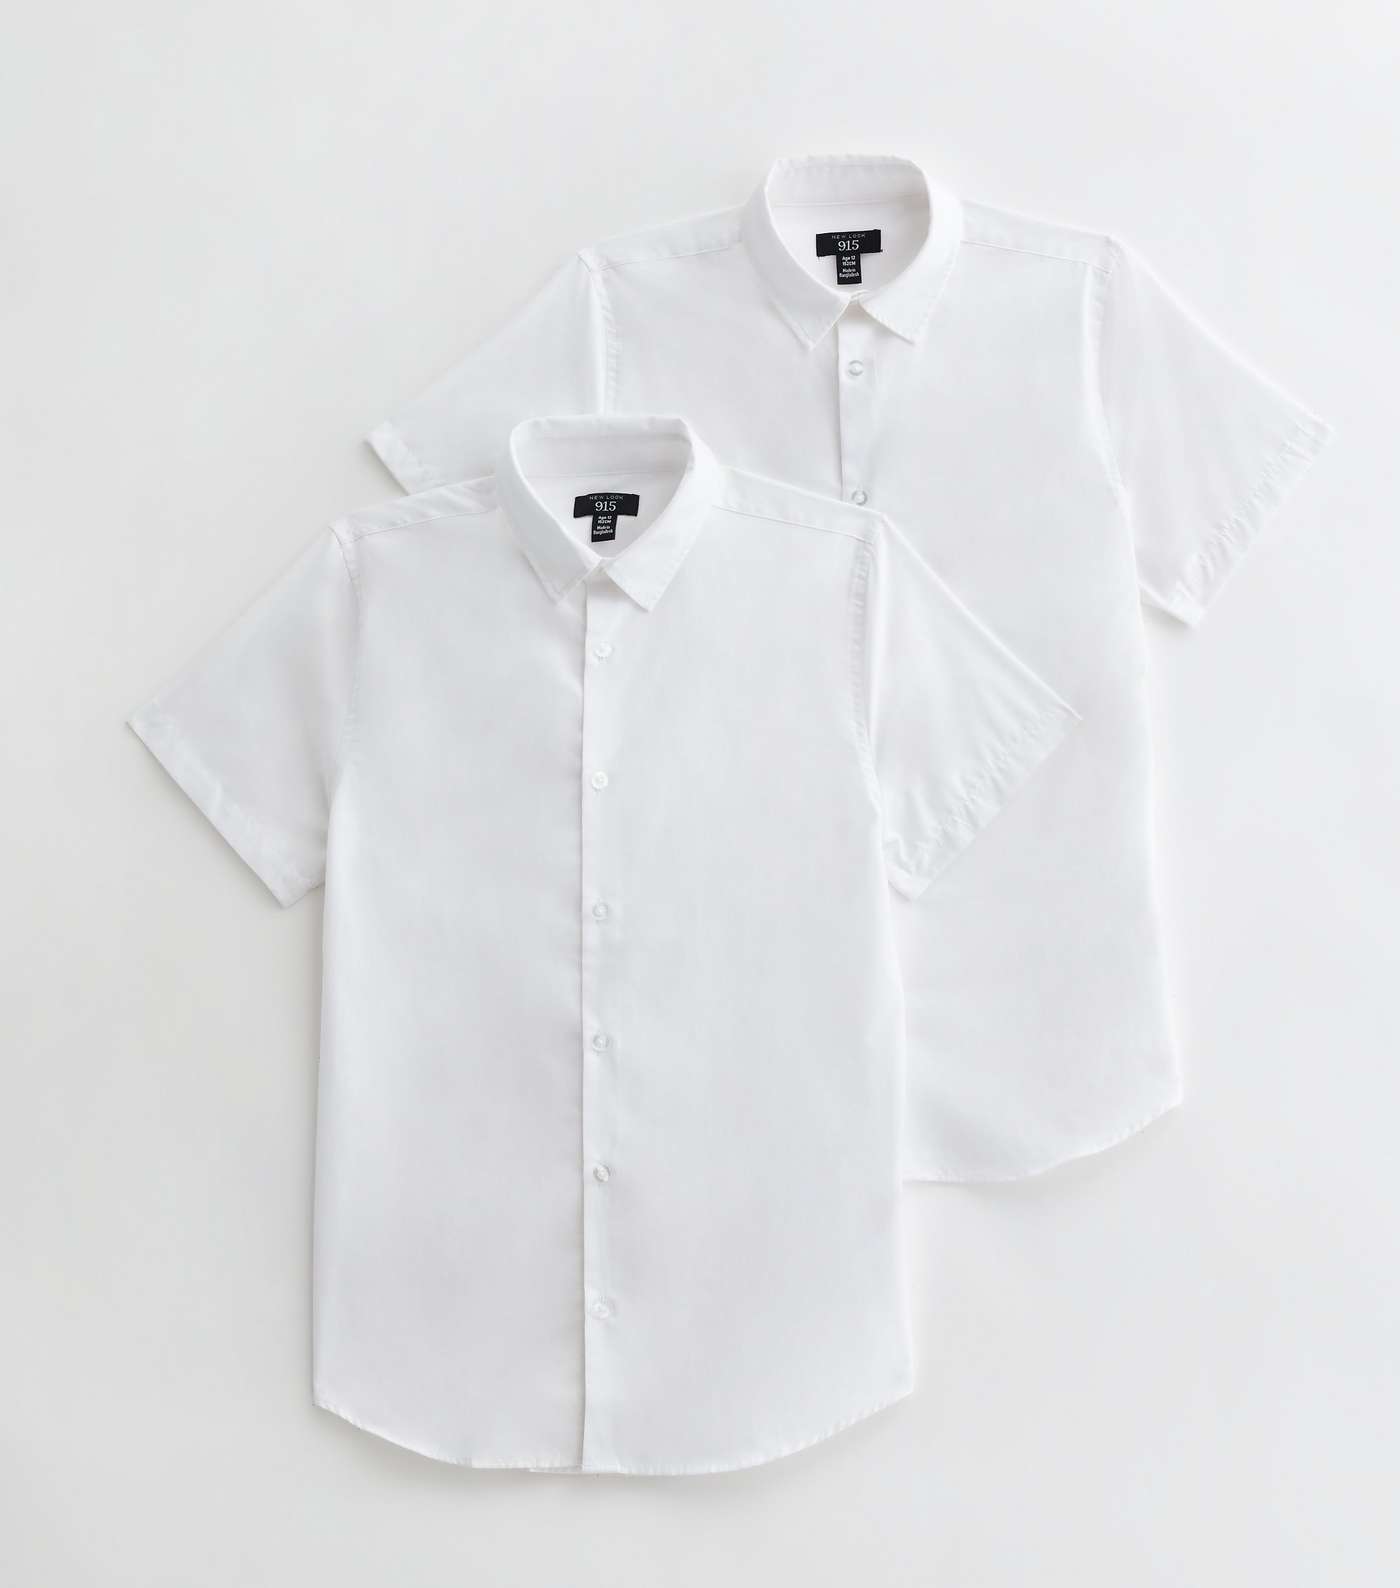 Boys 2 Pack White Short Sleeve Easy Care School Shirts Image 5